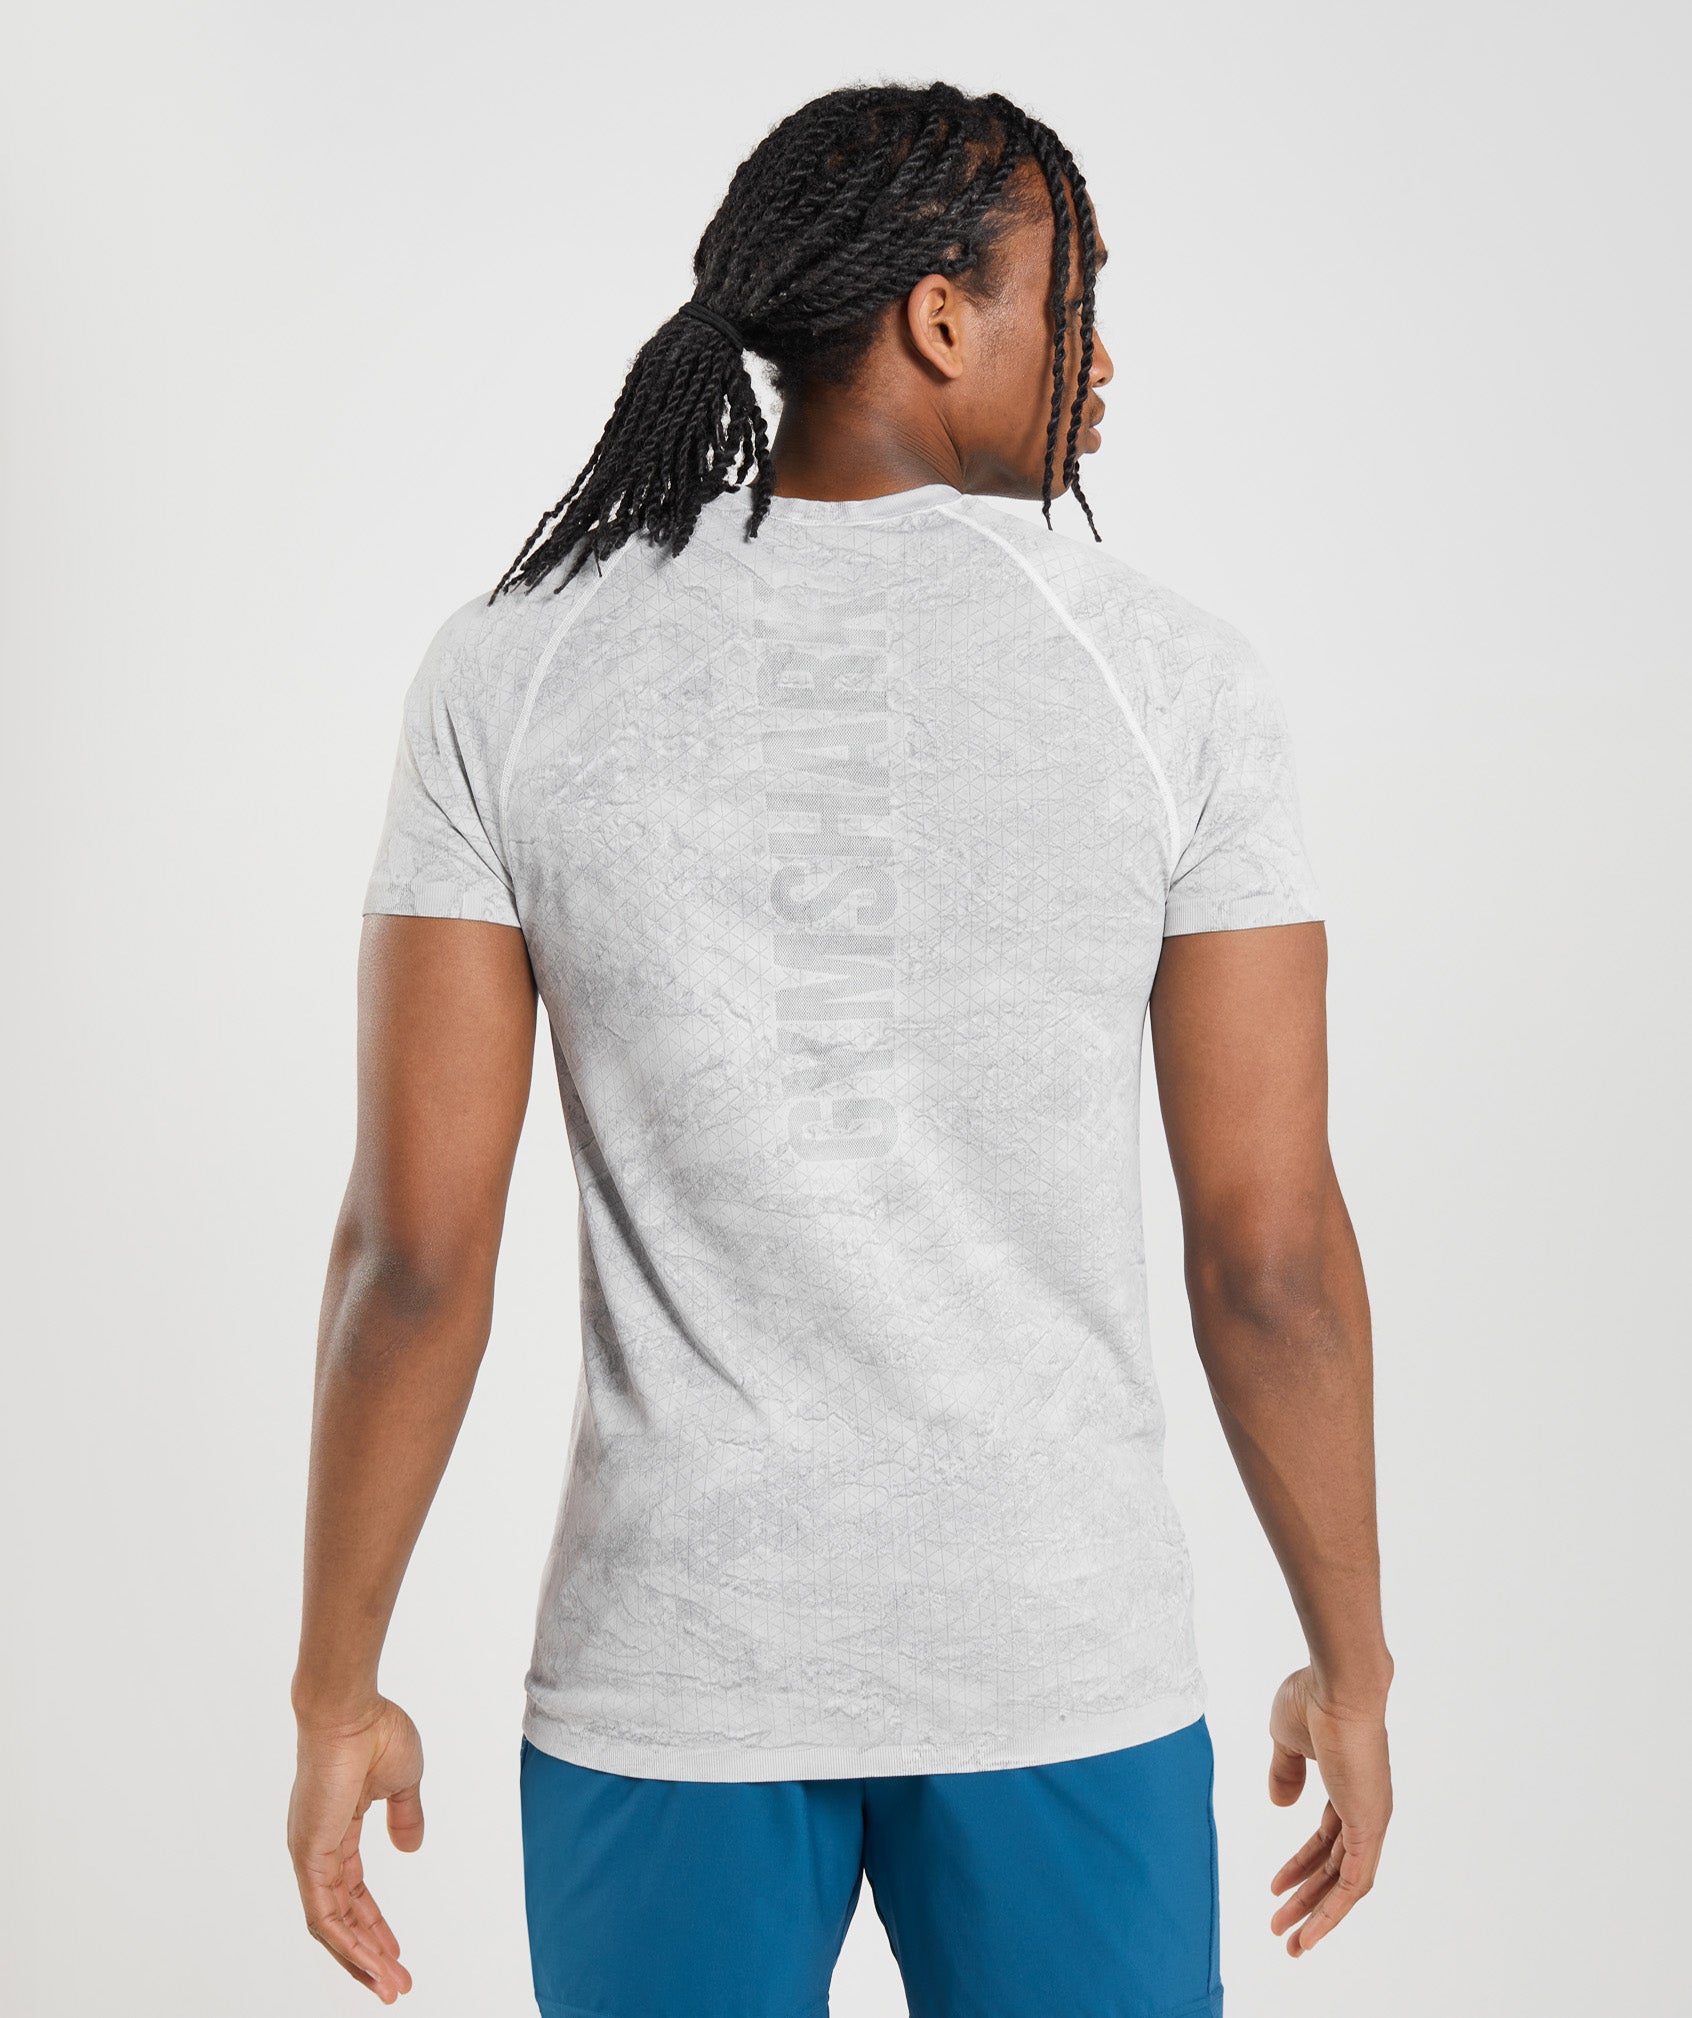 Geo Seamless T-Shirt in Off White/Light Grey